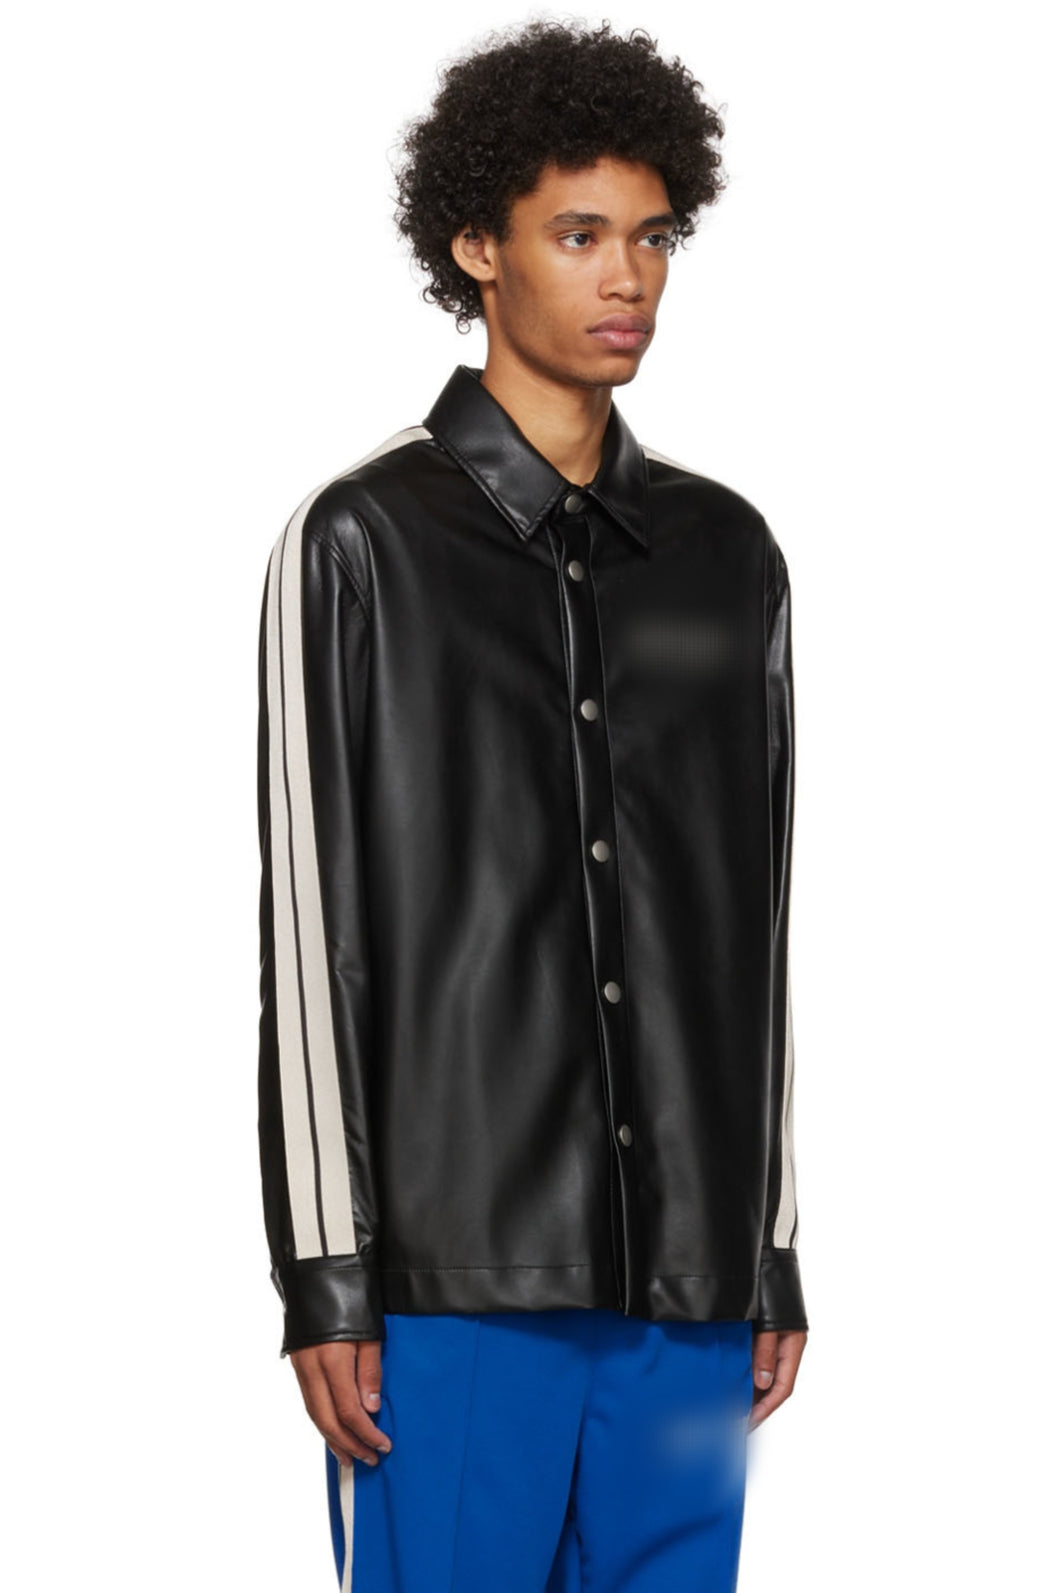 Men’s Stylish Black Genuine Leather Shirt With White Stripes